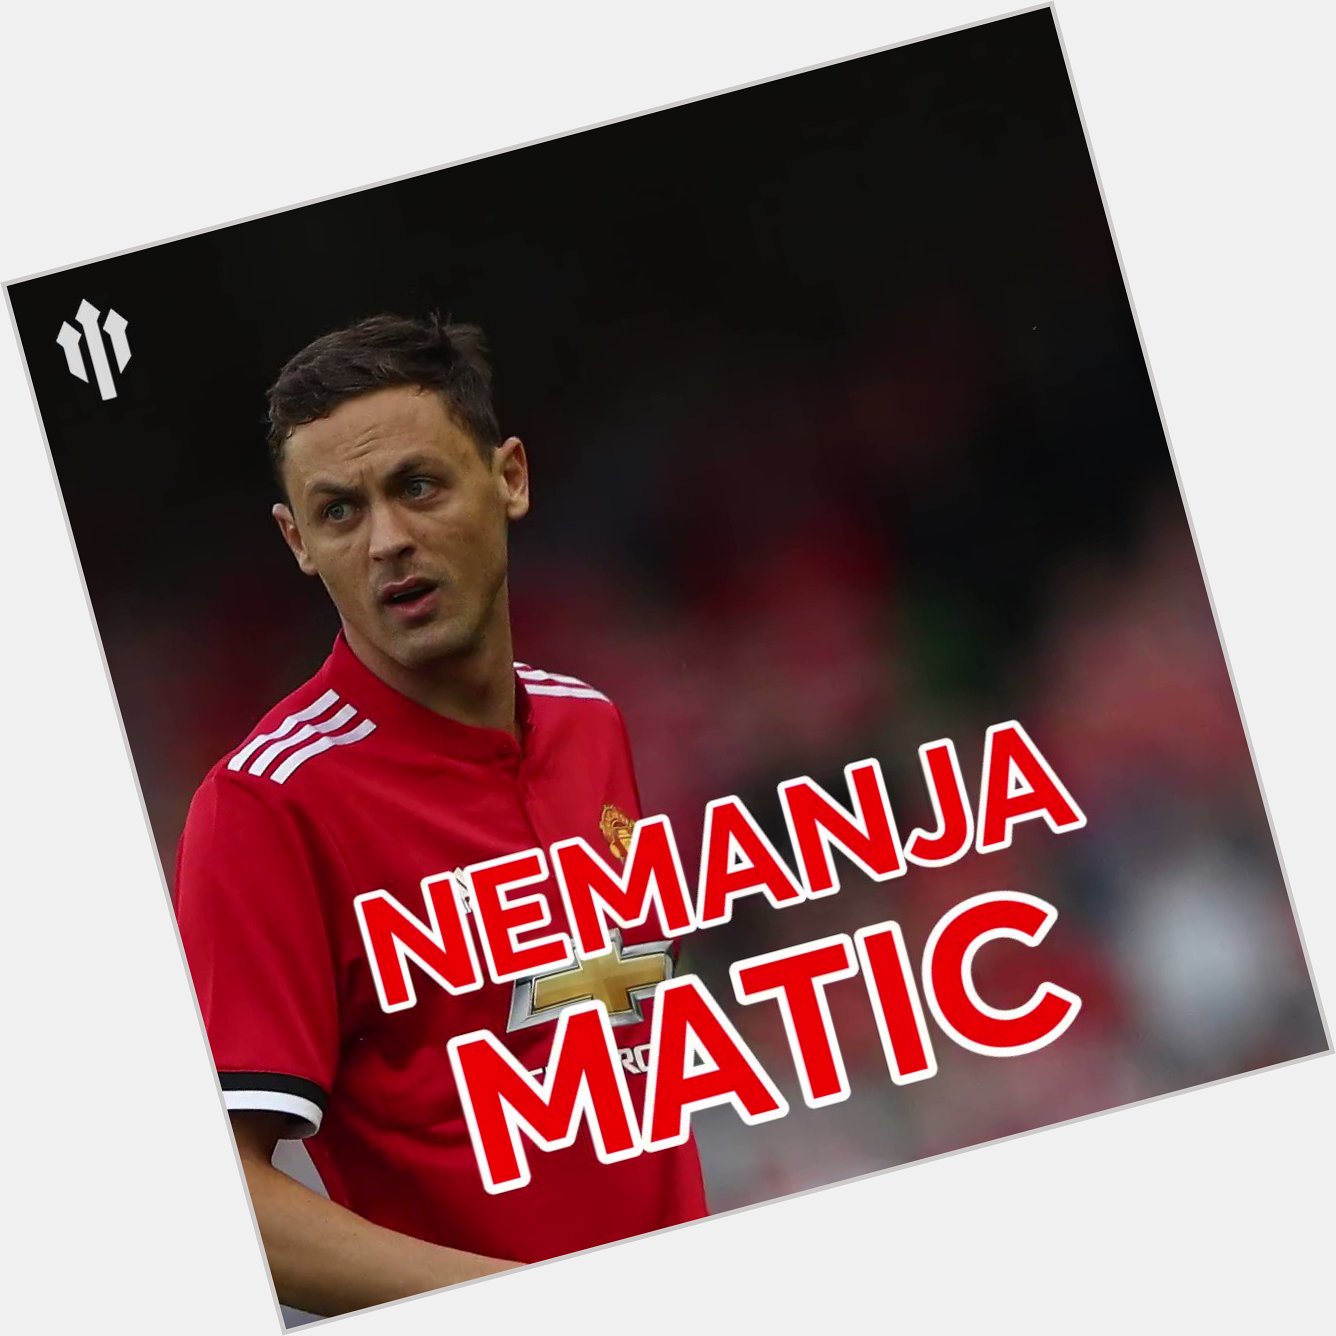 Happy birthday to Nemanja Matic - what a guy! 